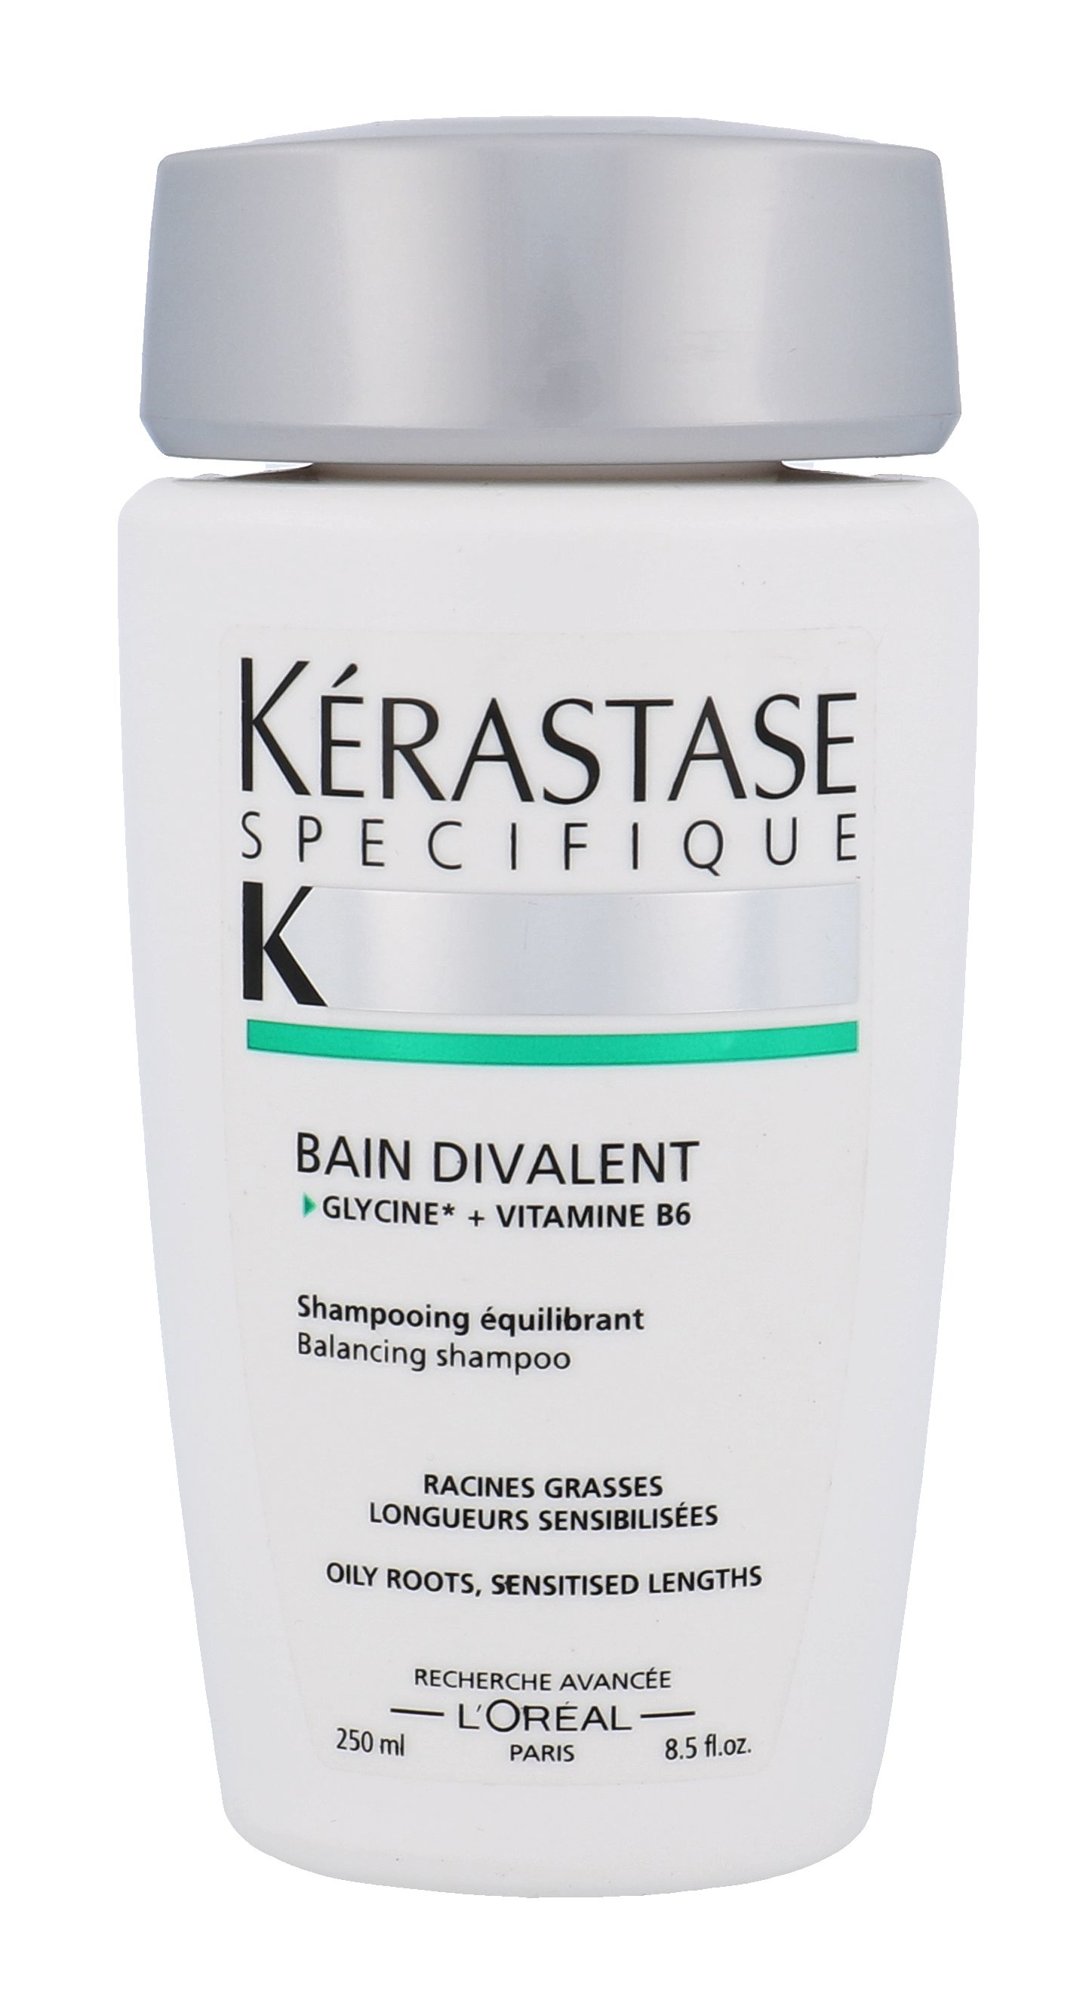 Kerastase Specifique Bain Divalent Balancing Shampoo Oily